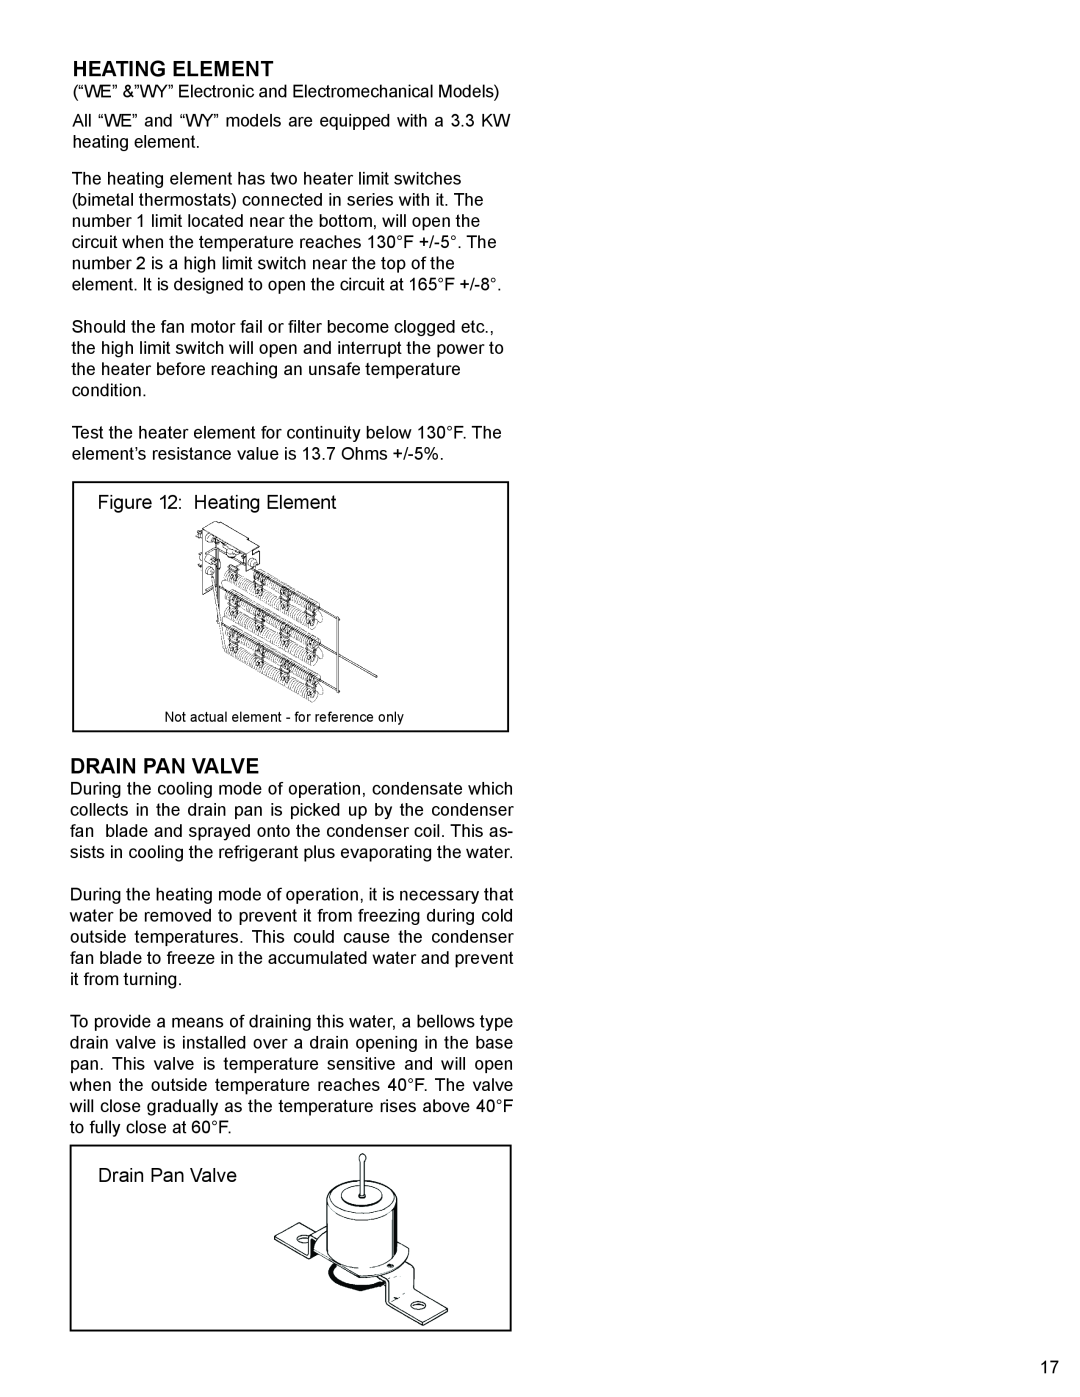 Friedrich 2009, 2008 service manual Heating Element, Drain Pan Valve 